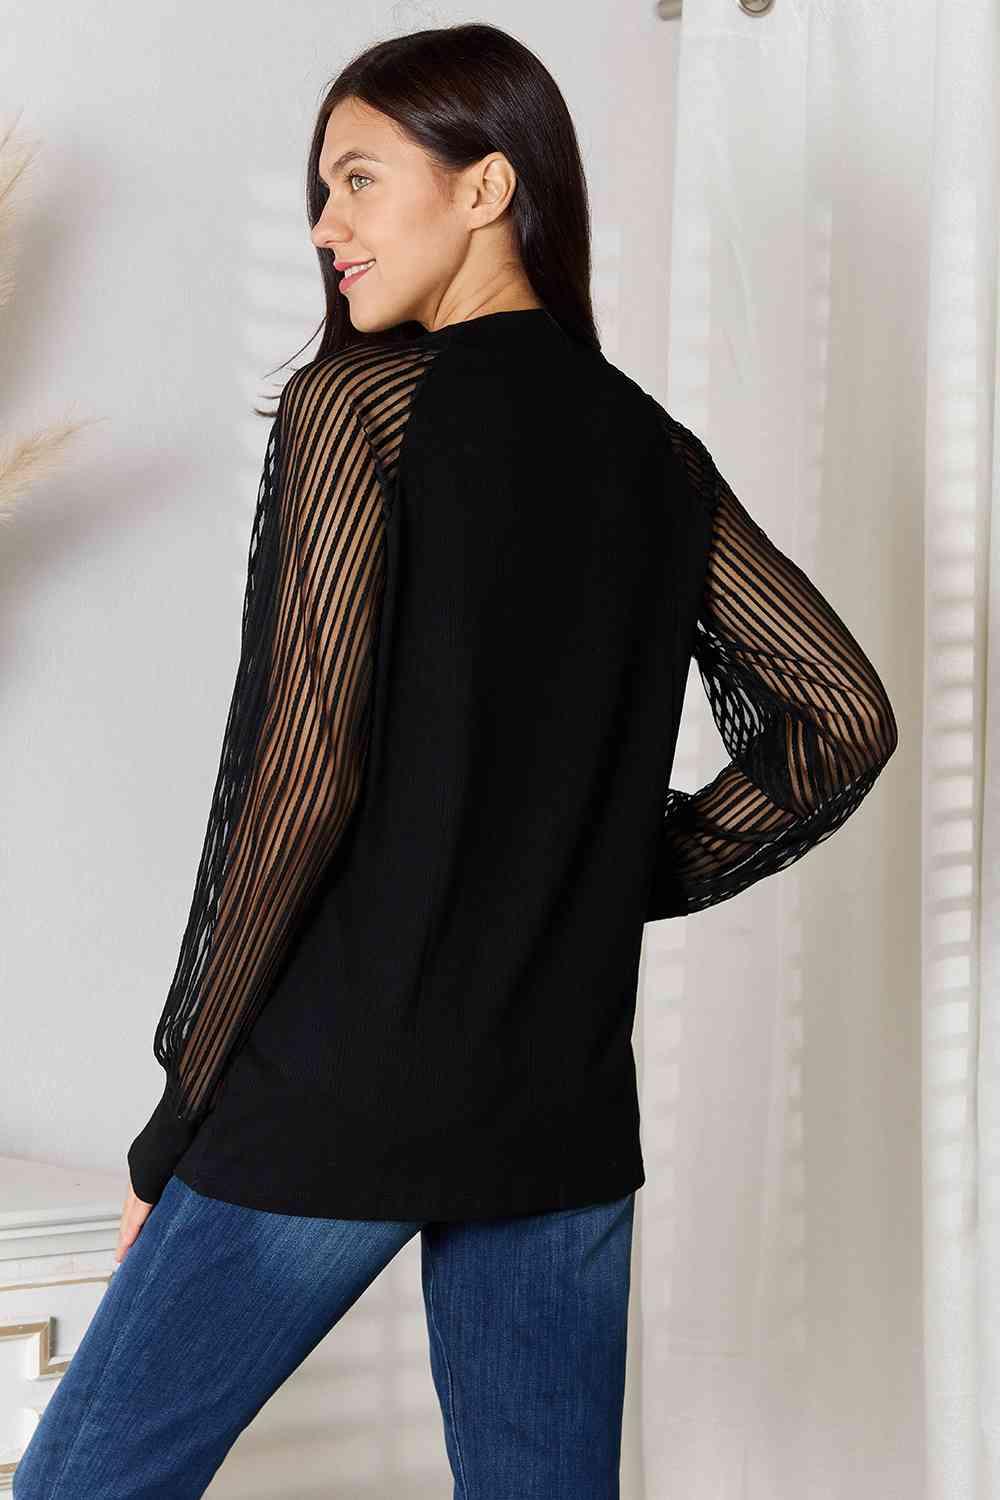 Double Take Round Neck Raglan Sleeve Blouse - SwagglyLife Home & Fashion